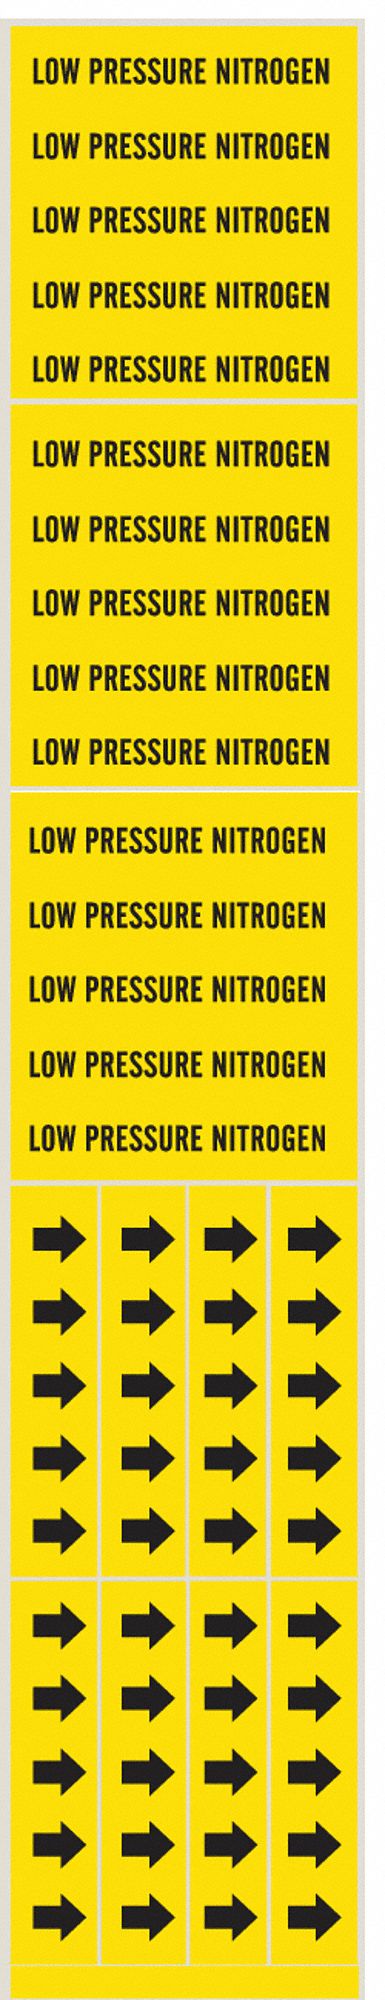 Pipe Mrkr,Low Pressure Nitrogen,to 3/4In